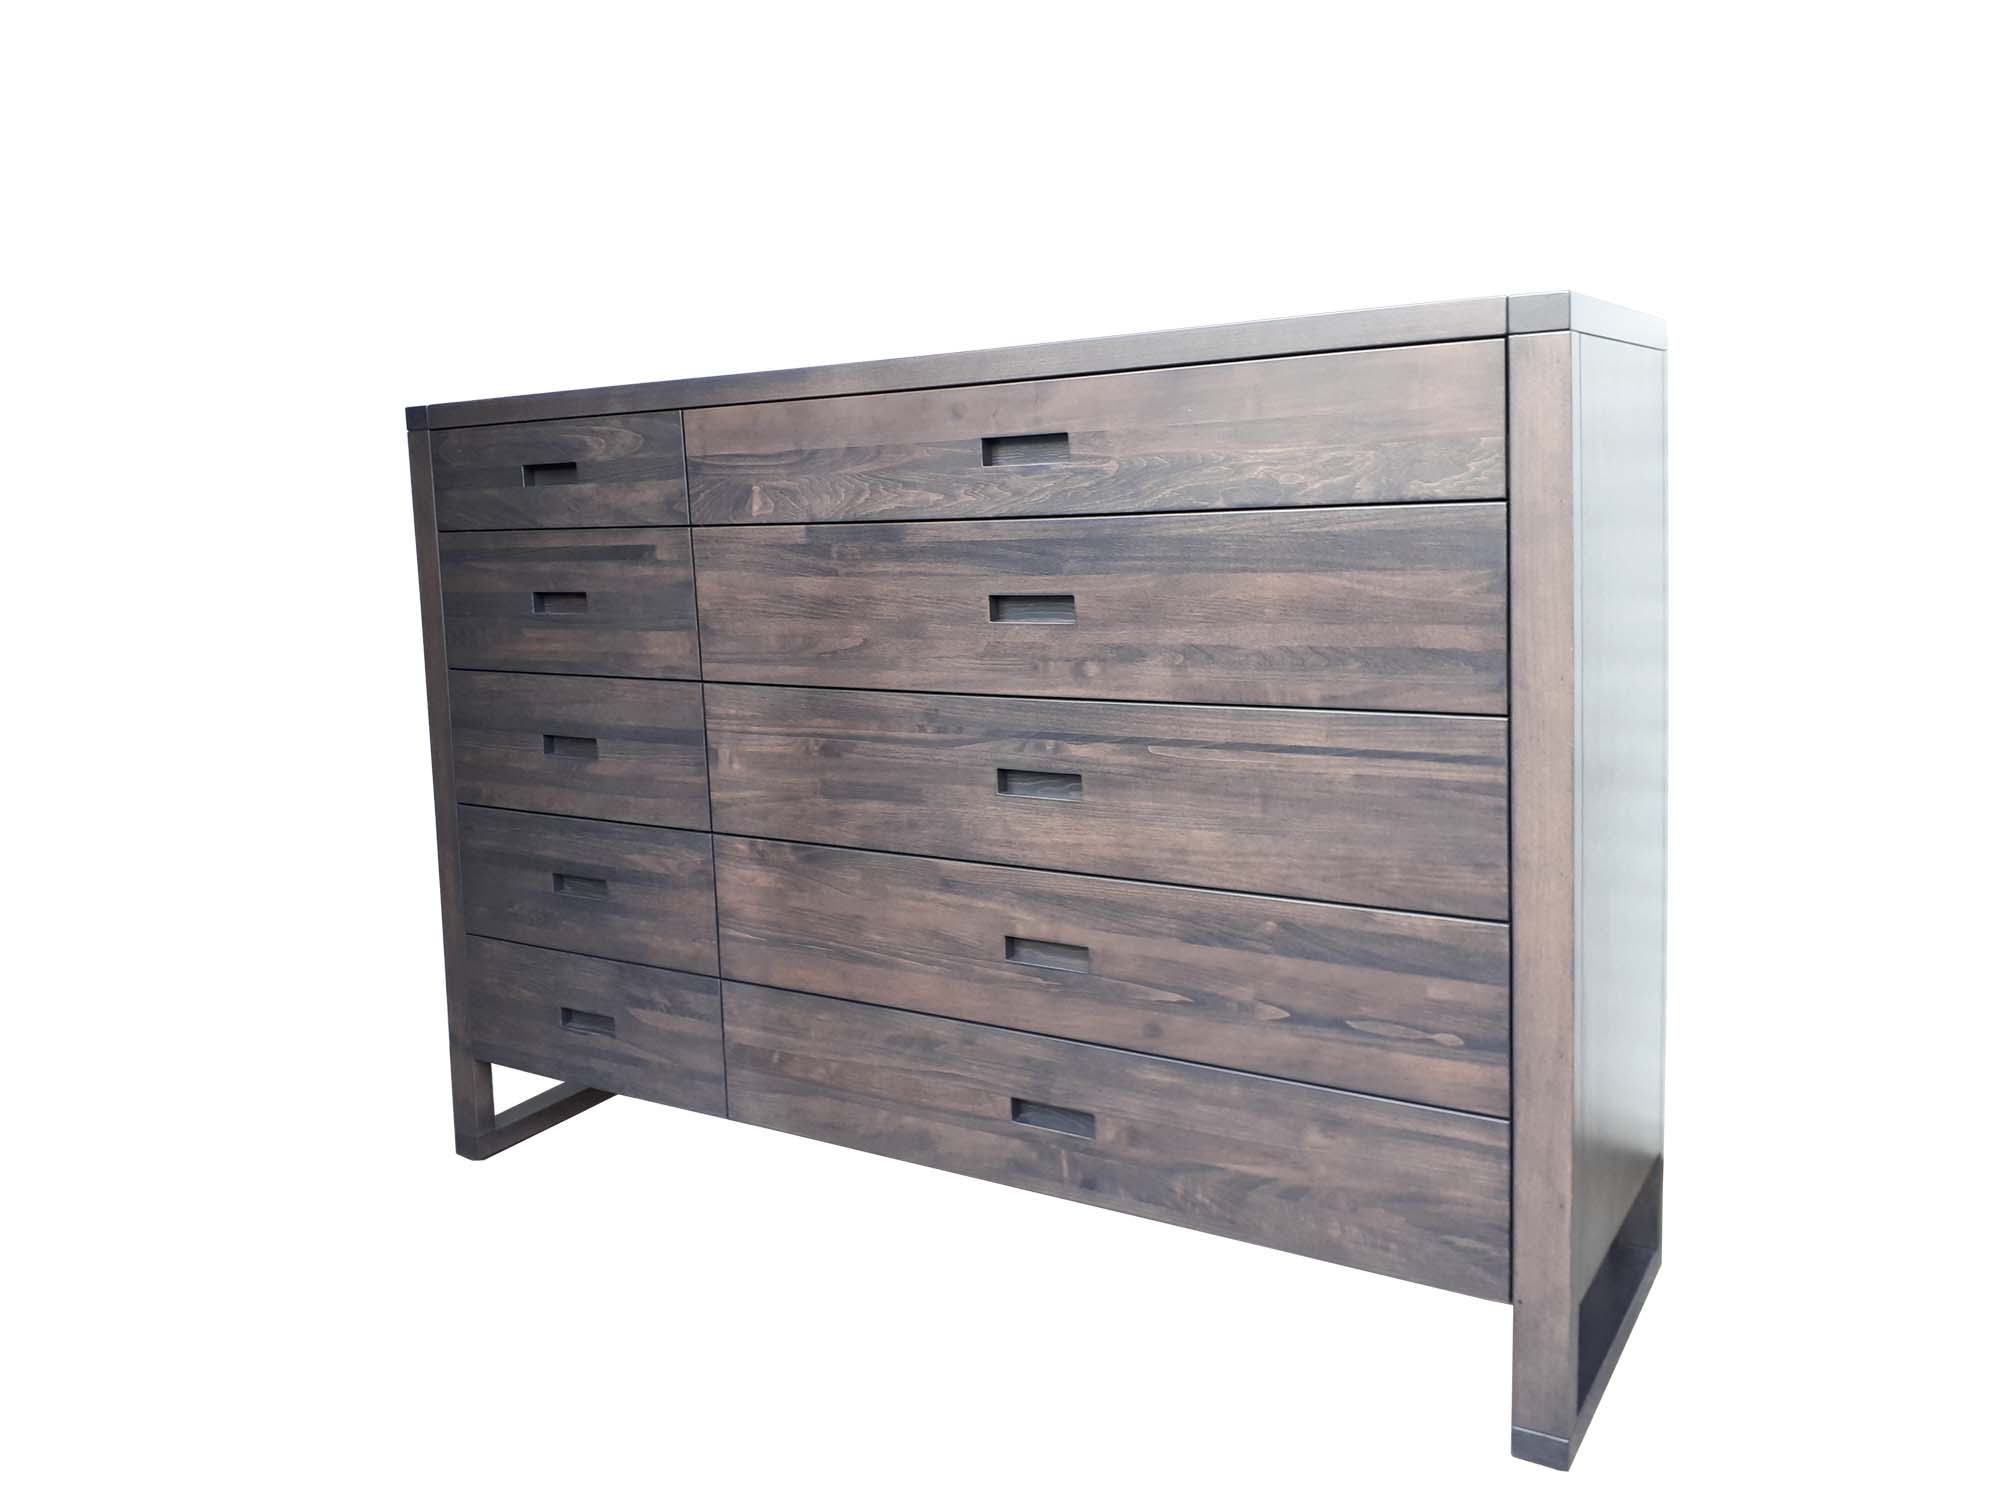 Custom design by Creative Home Furnishings - solid wood dresser